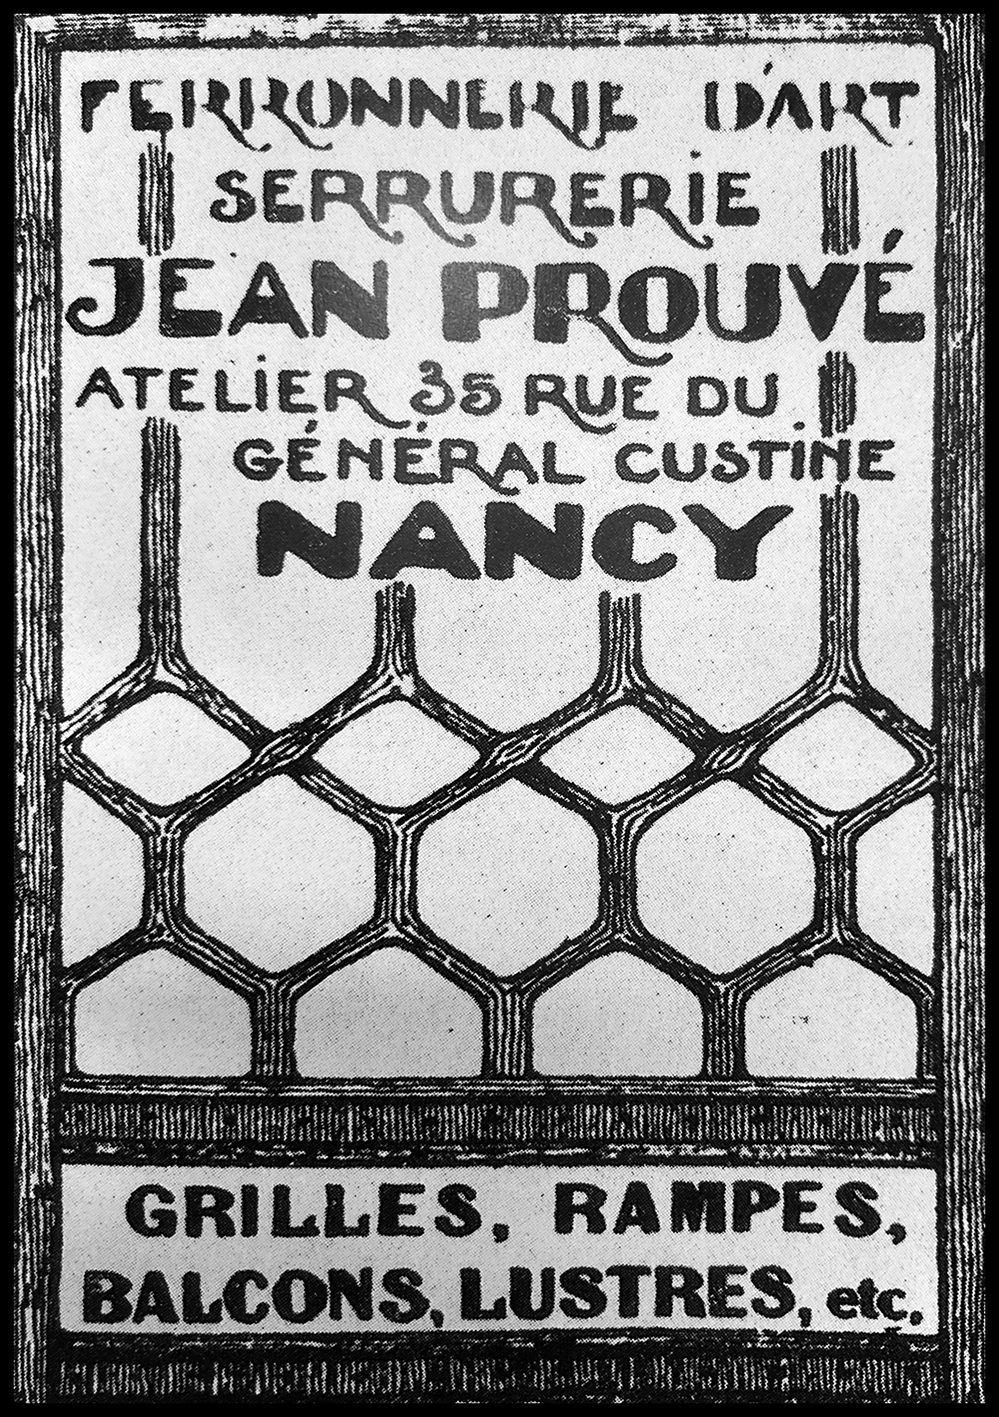 Jean Prouvé iron workshop, advertising document by A. Legrand, c. 1924.